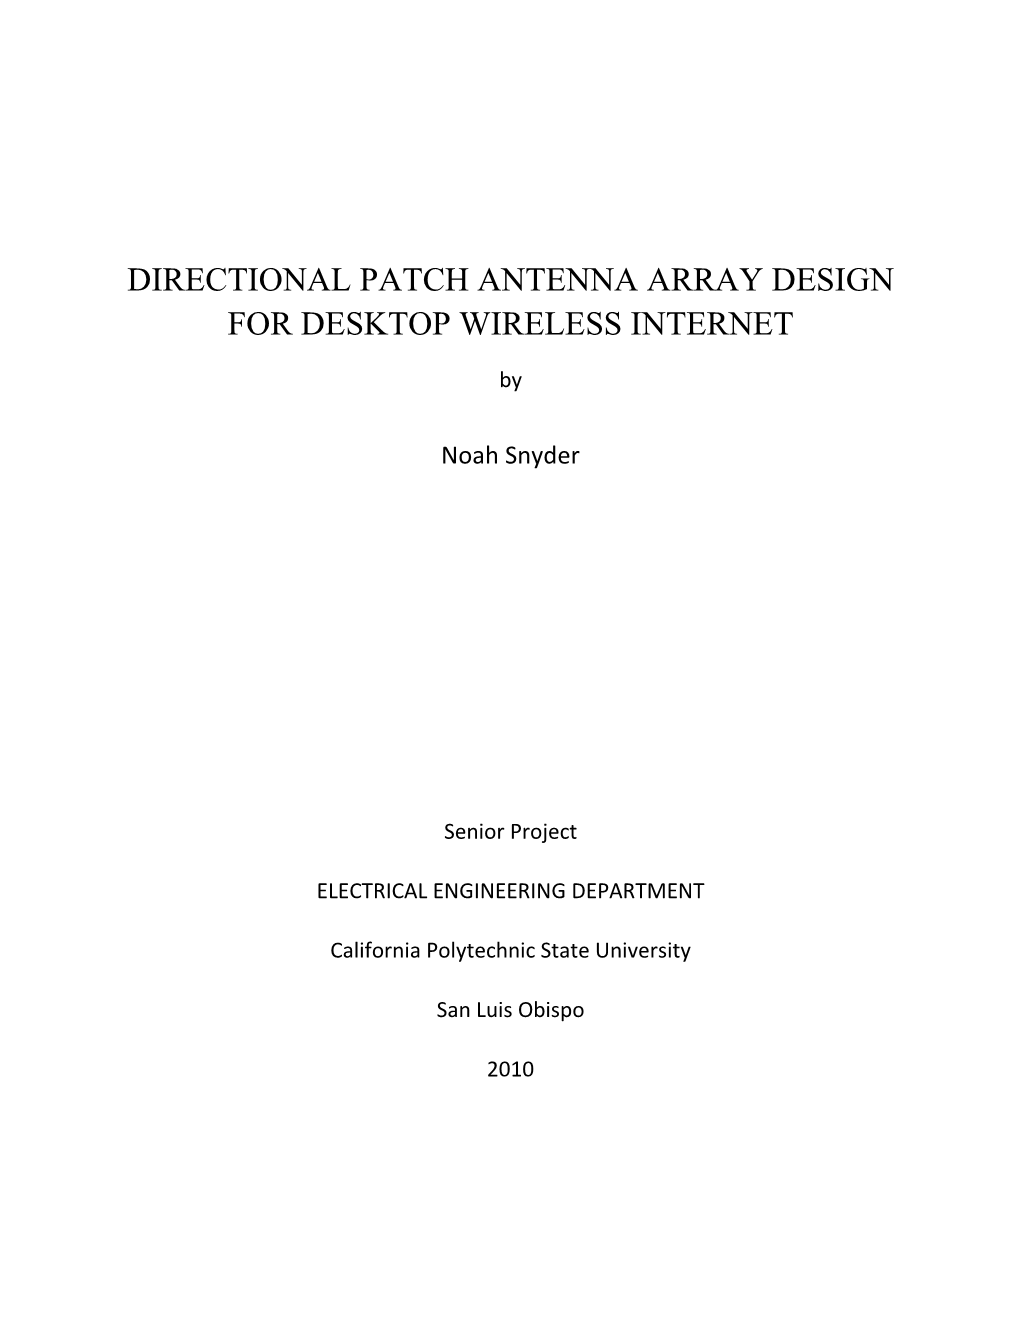 Directional Patch Antenna Array Design for Desktop Wireless Internet